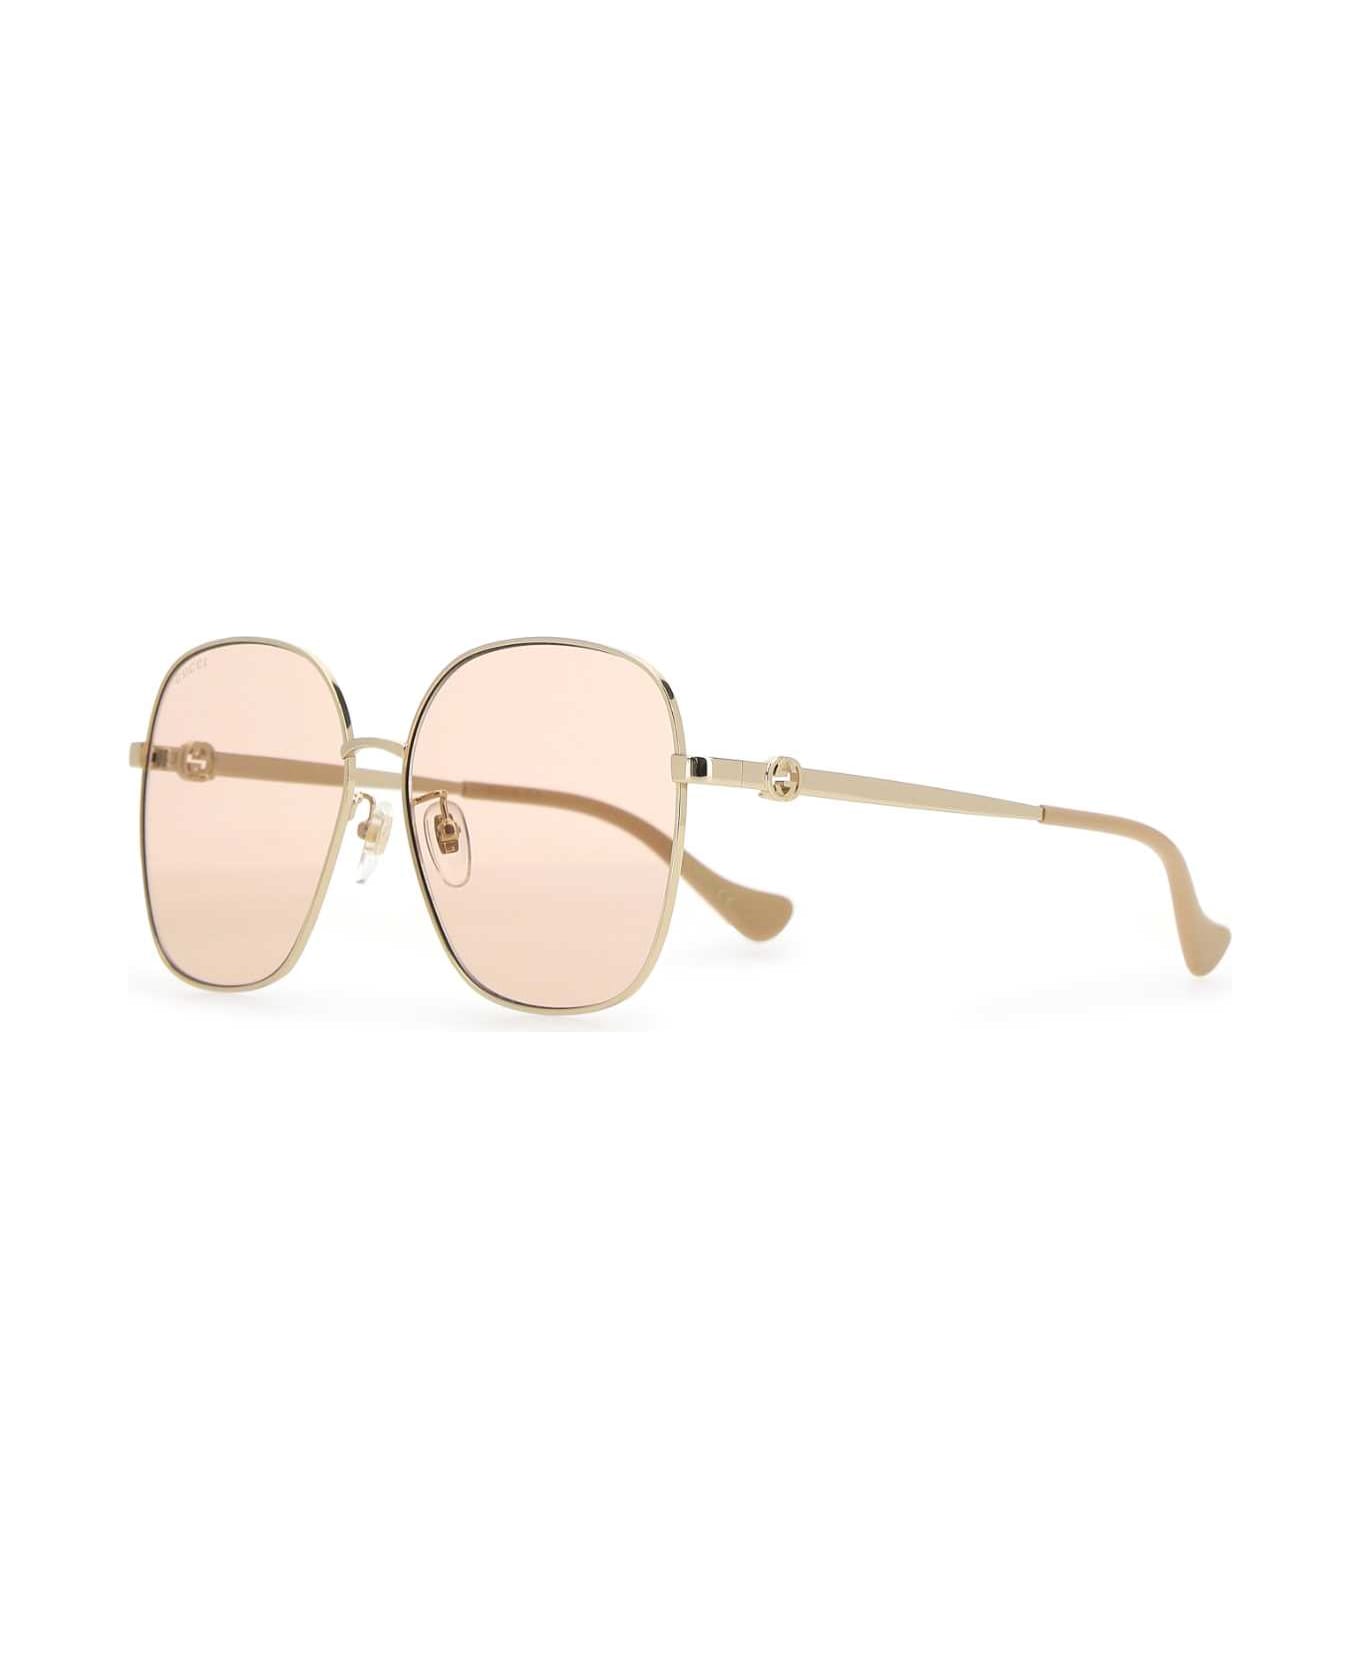 Gucci Gold Metal Sunglasses - 8059 サングラス